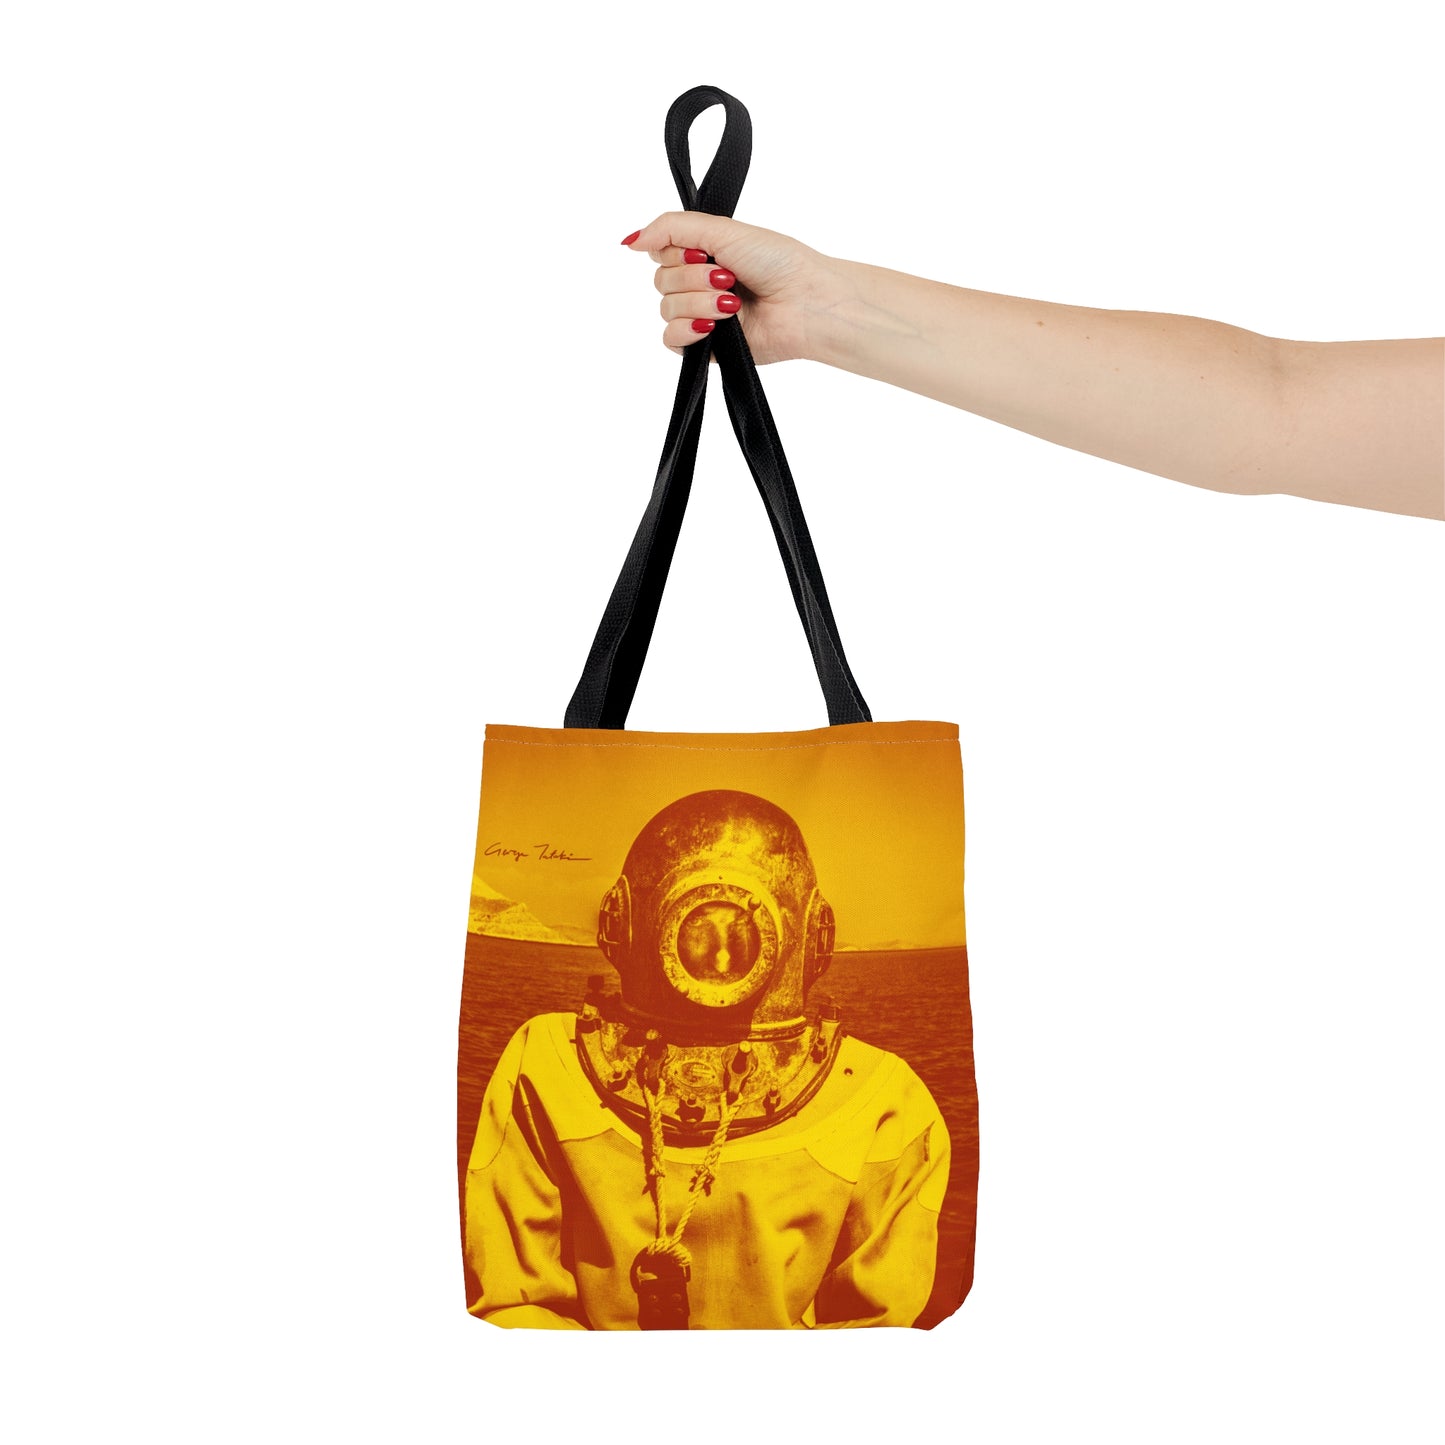 Kalymnos Sponge Diver Tote Bag - Vibrant Yellow-Orange Gradient Print - holding